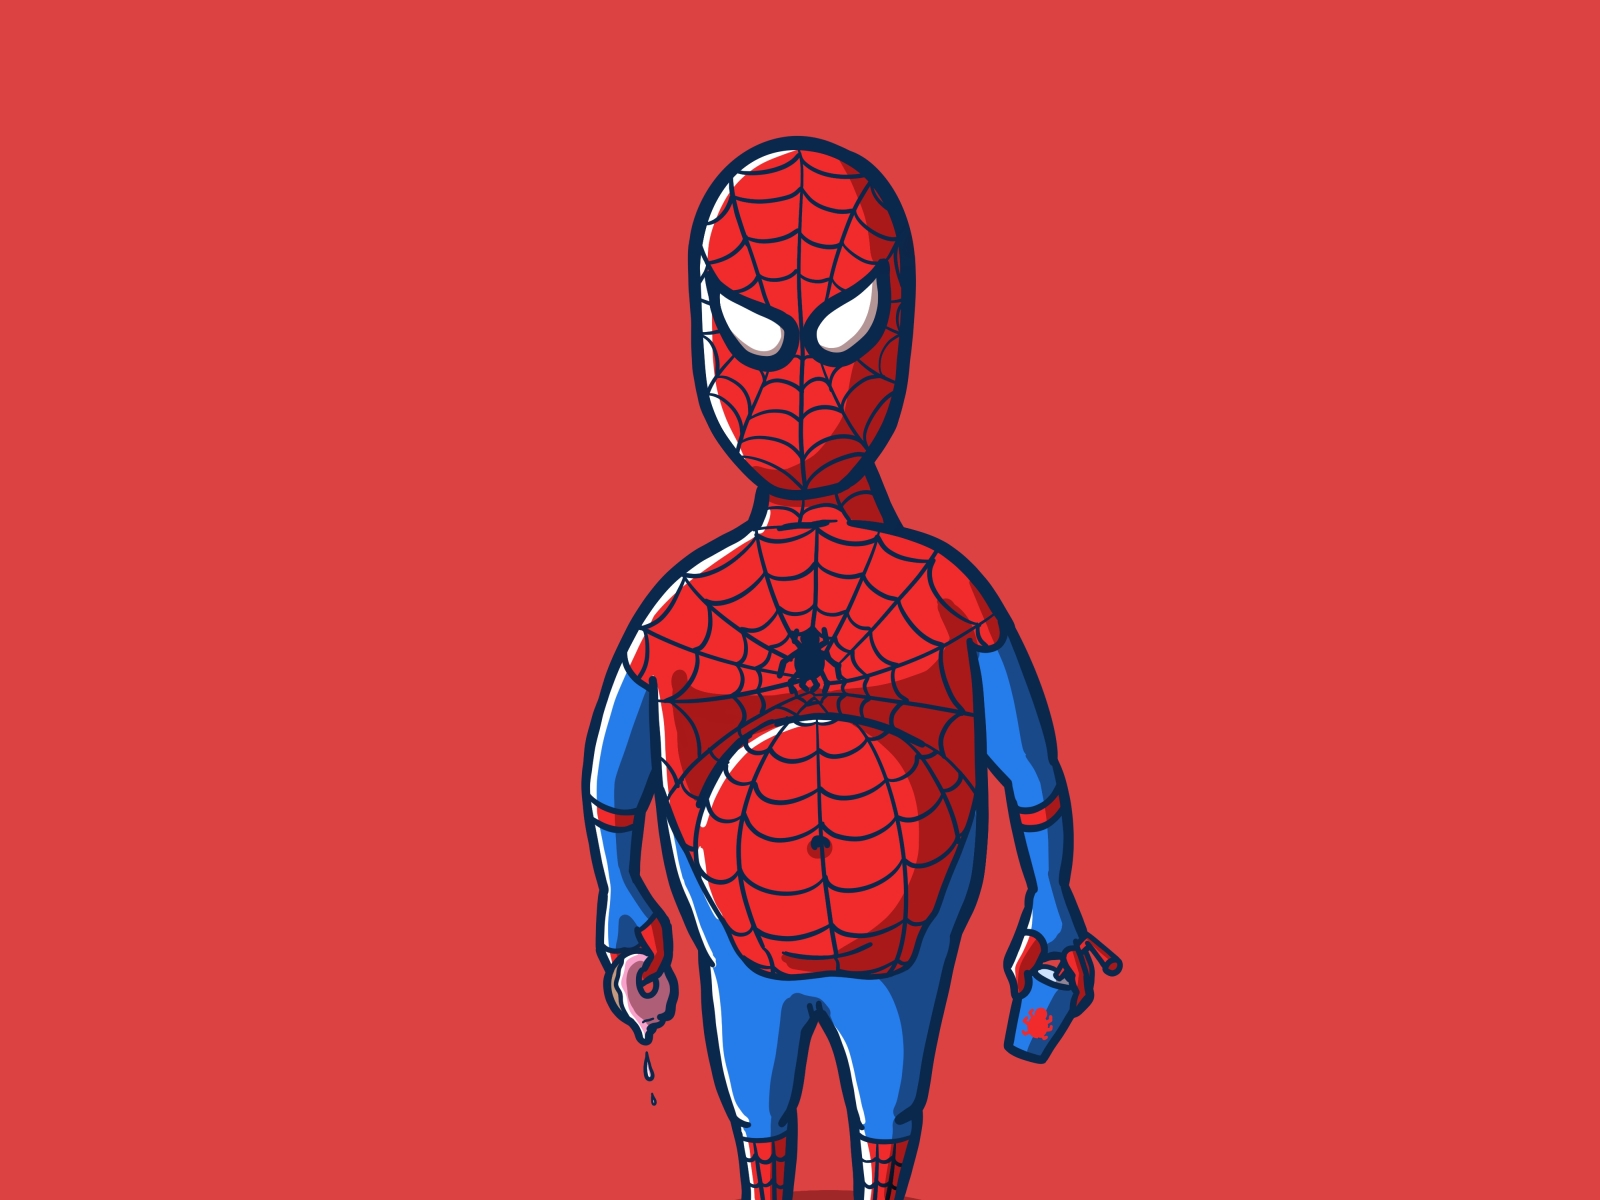 Spiderman bobble head 2K wallpaper download